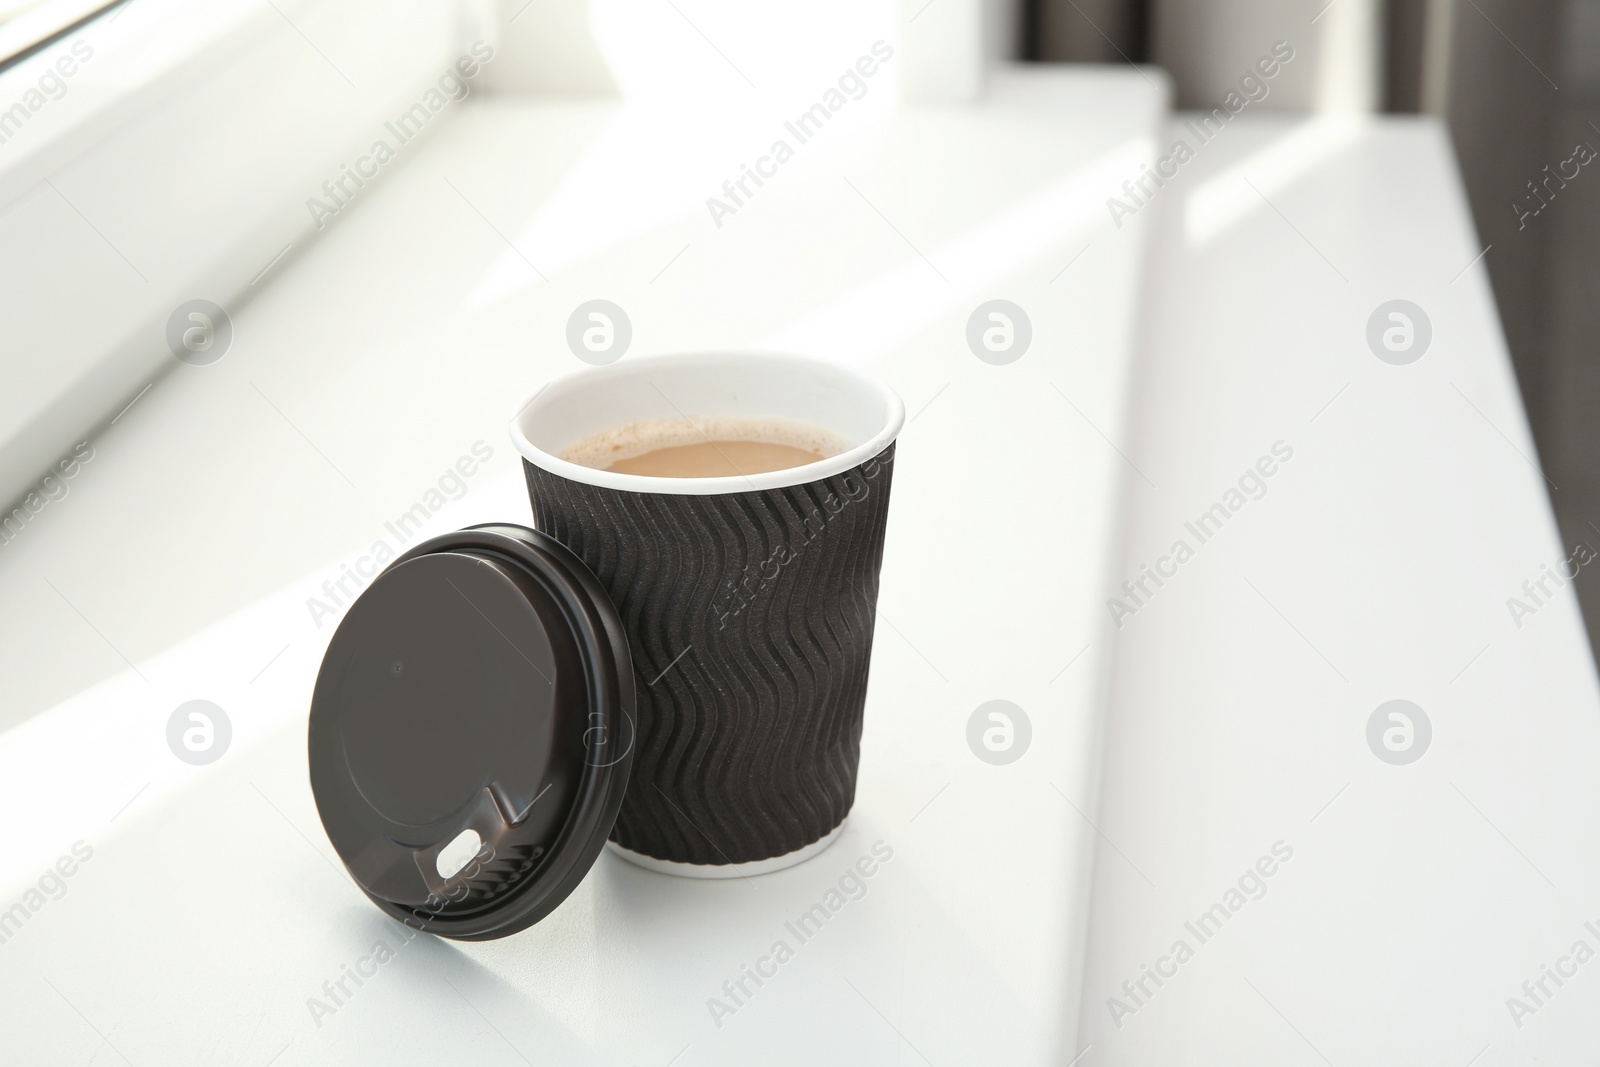 Photo of Cardboard cup of coffee on window sill indoors